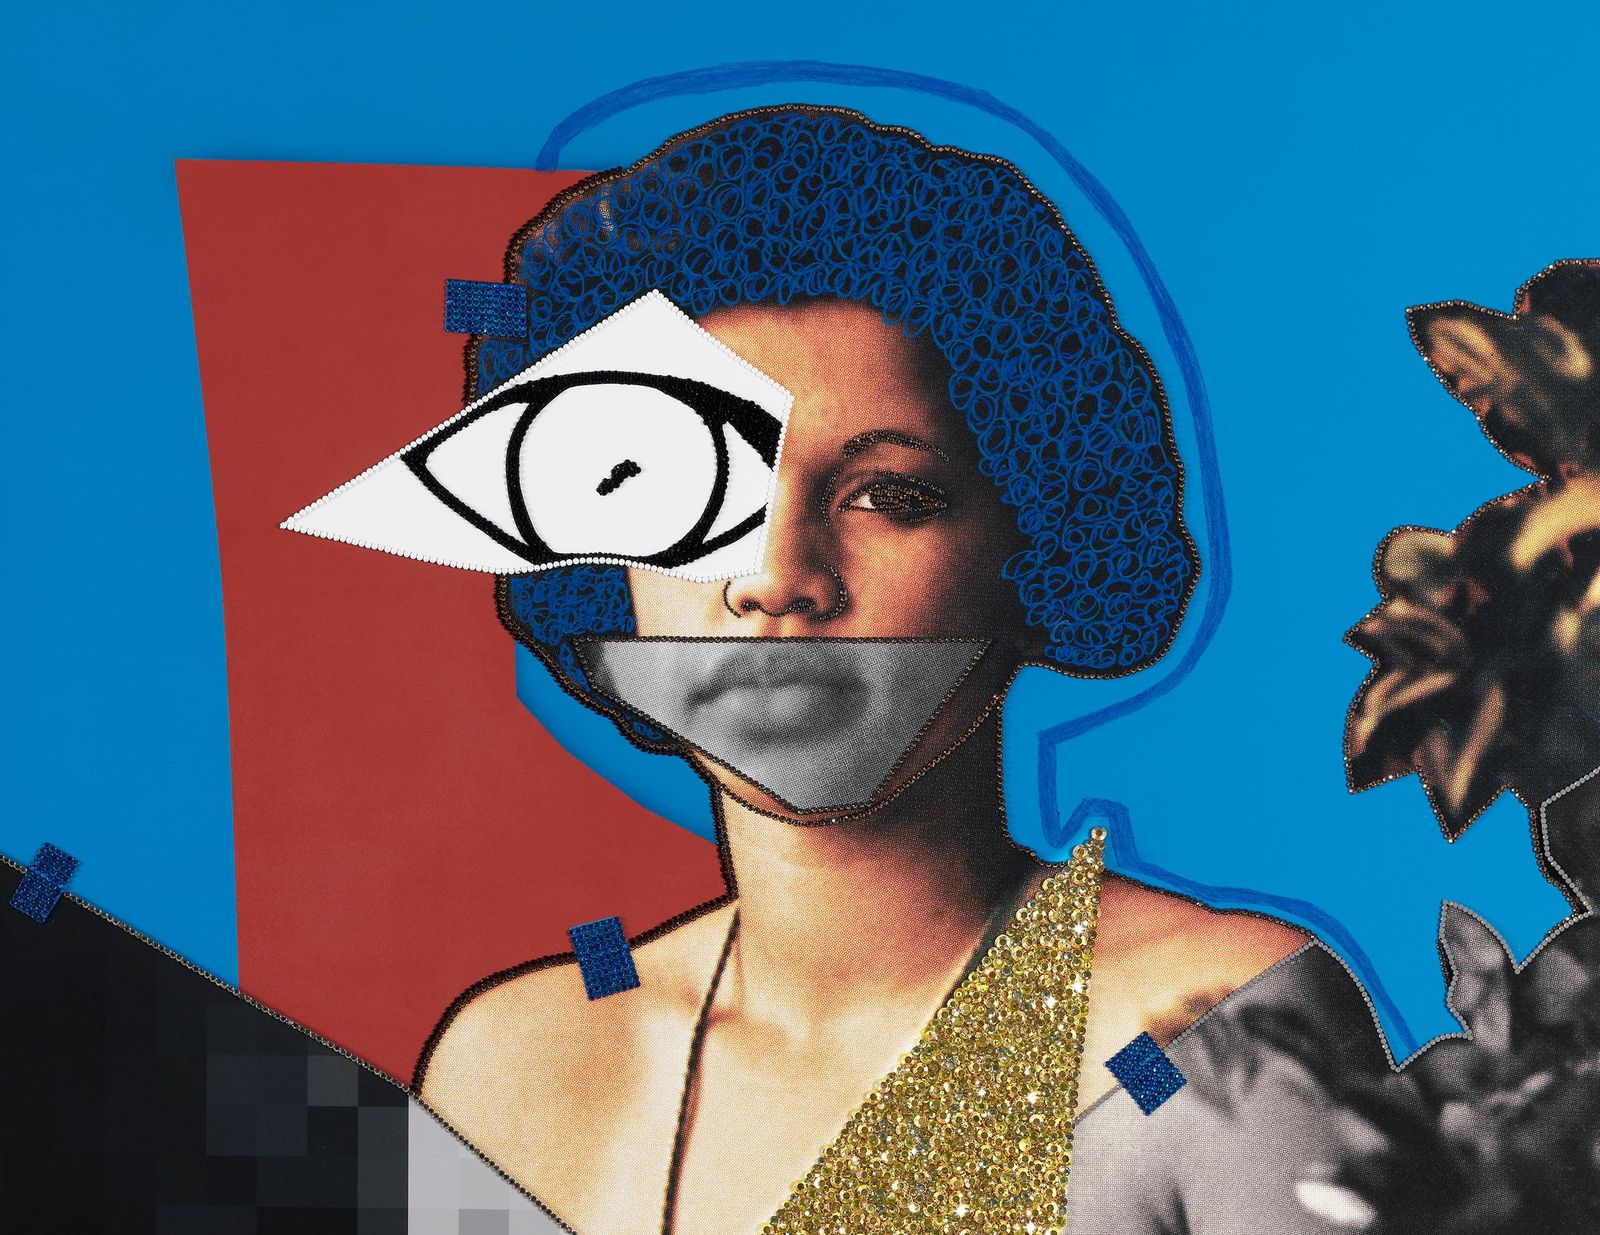 Mickalene Thomas’ Dazzling Collages Reclaim Black Women’s Bodies | Smart News